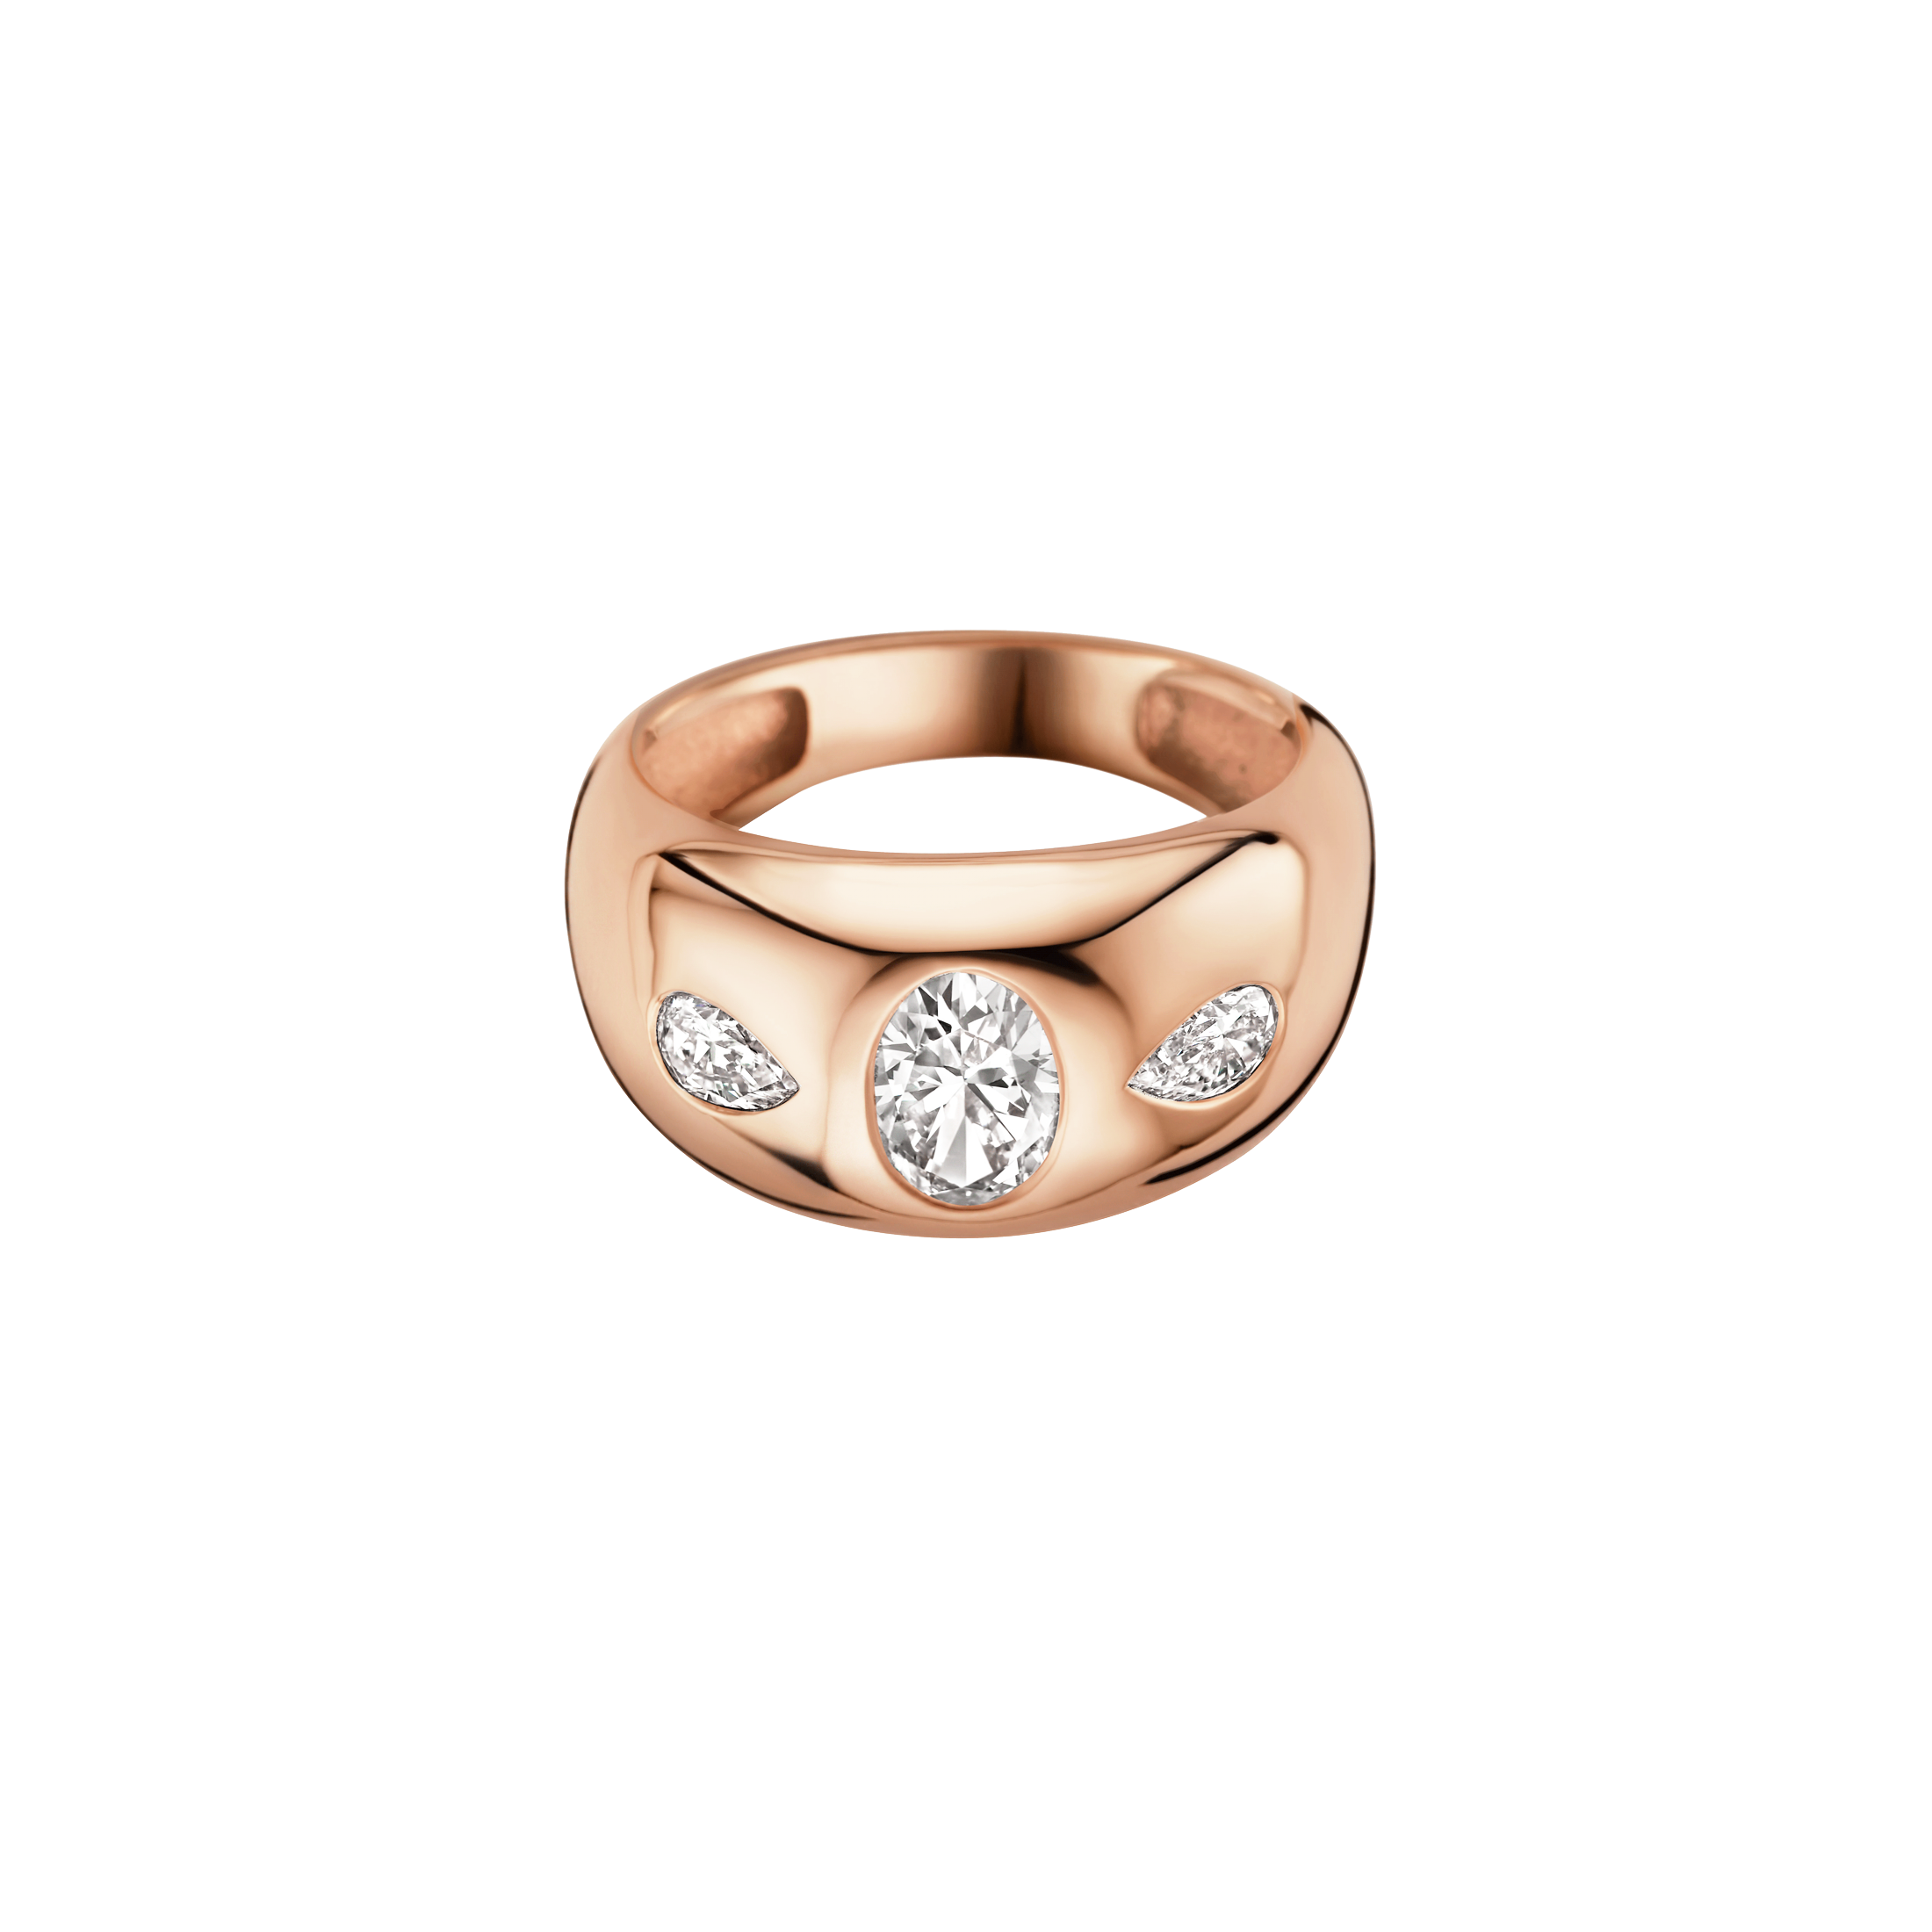 Simone Engagement ring packshot - rose gold 